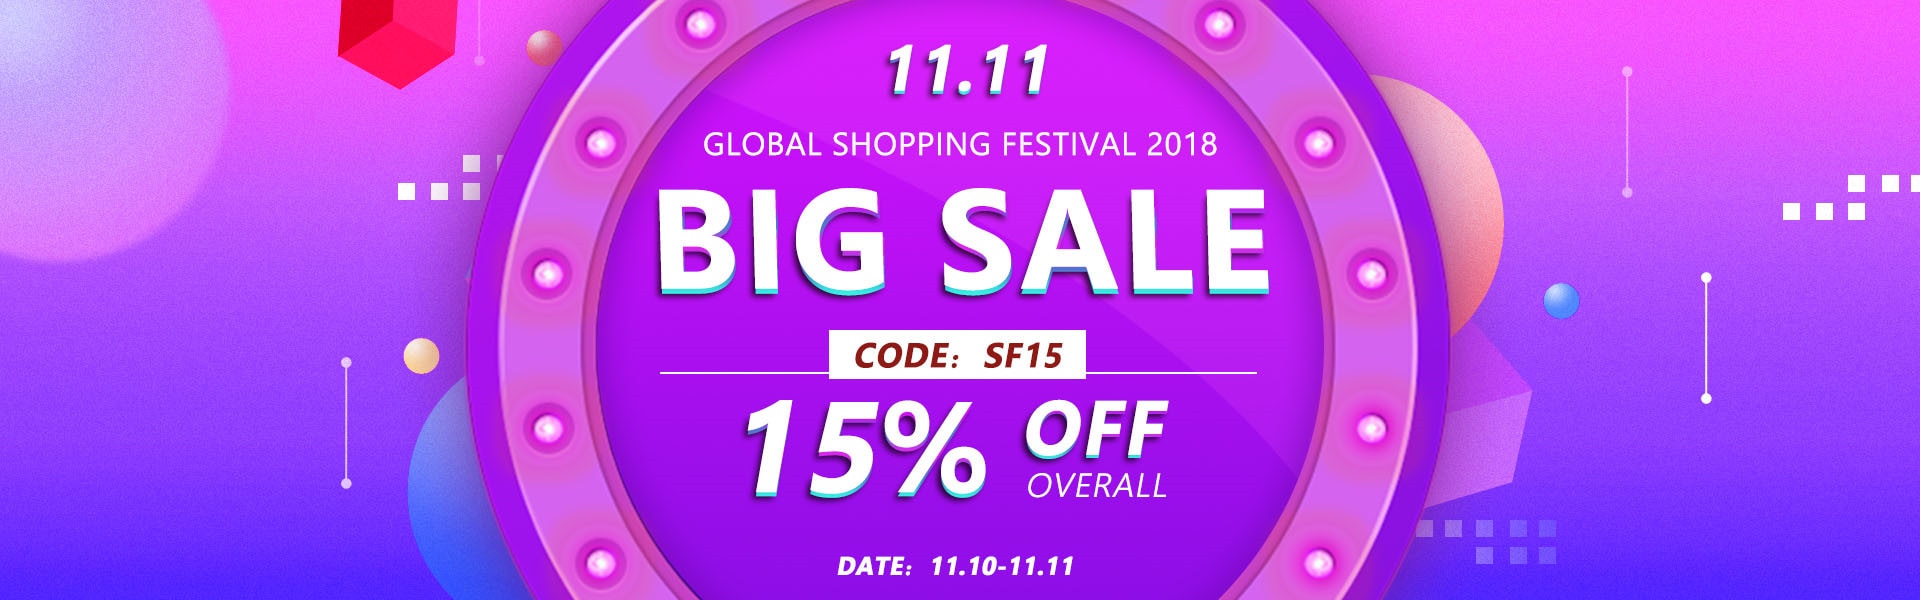 UNice 11.11 Big Hair Sale 2018